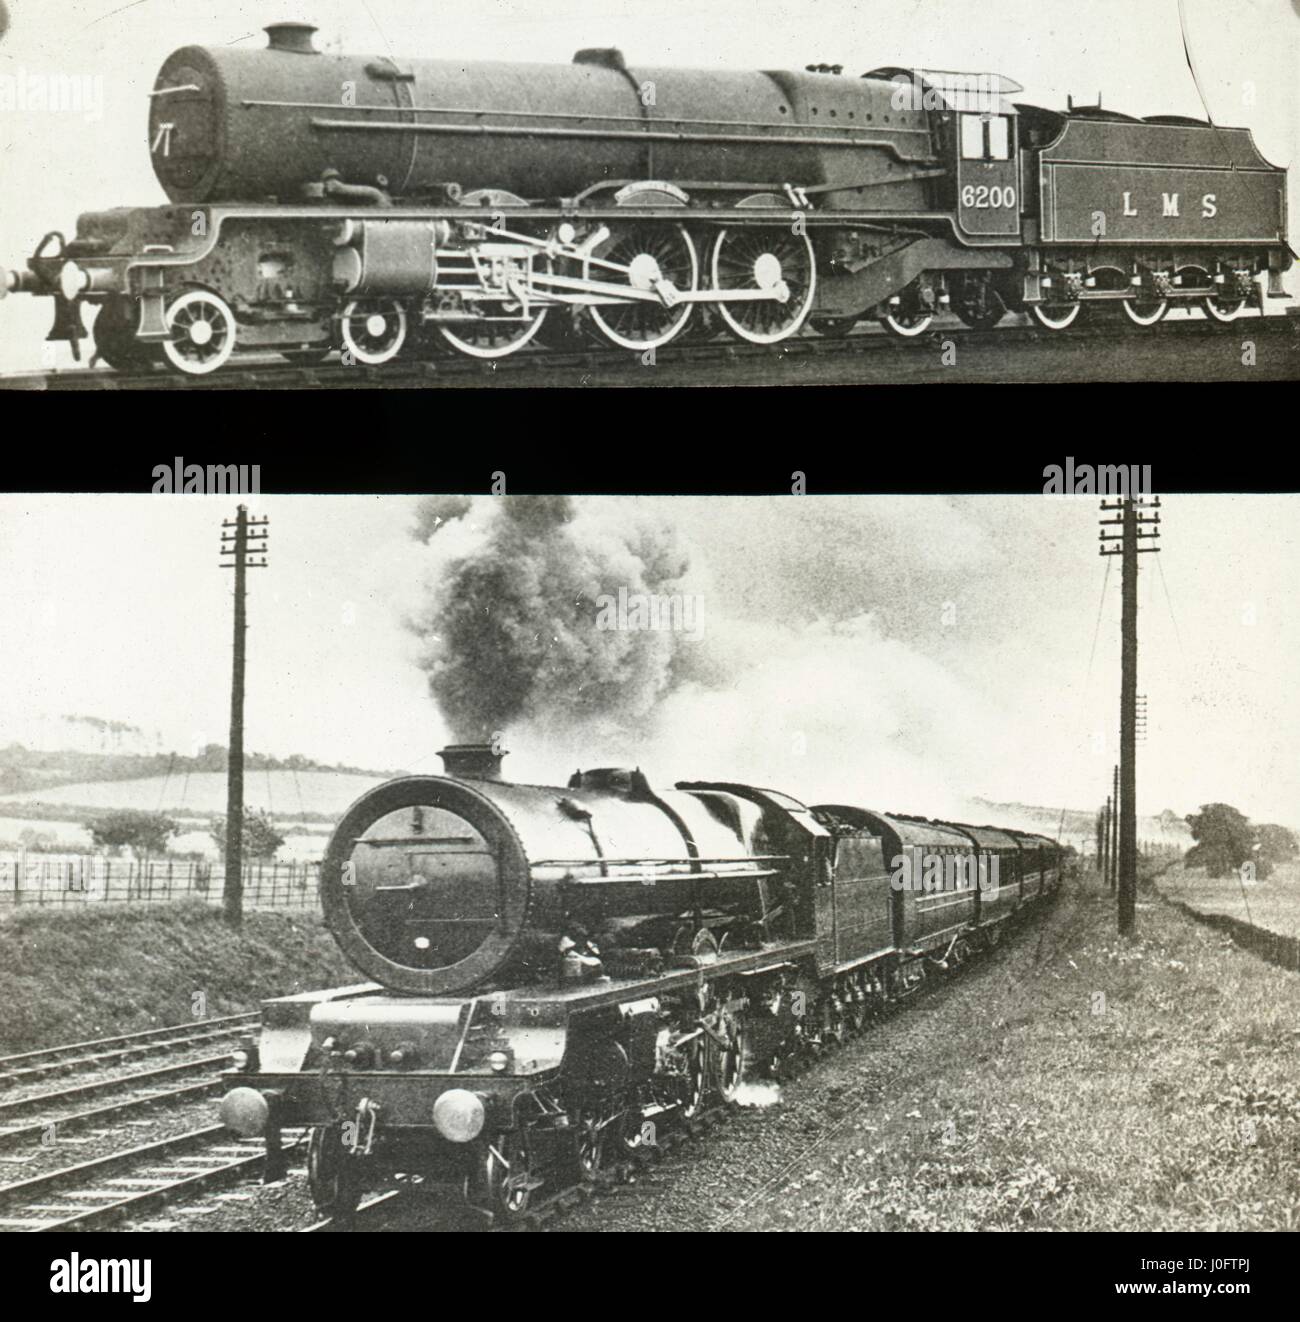 London, Midland and Scottish Railway LMS locomotive 6200 'The Princess Royal', (two images merged) Stock Photo